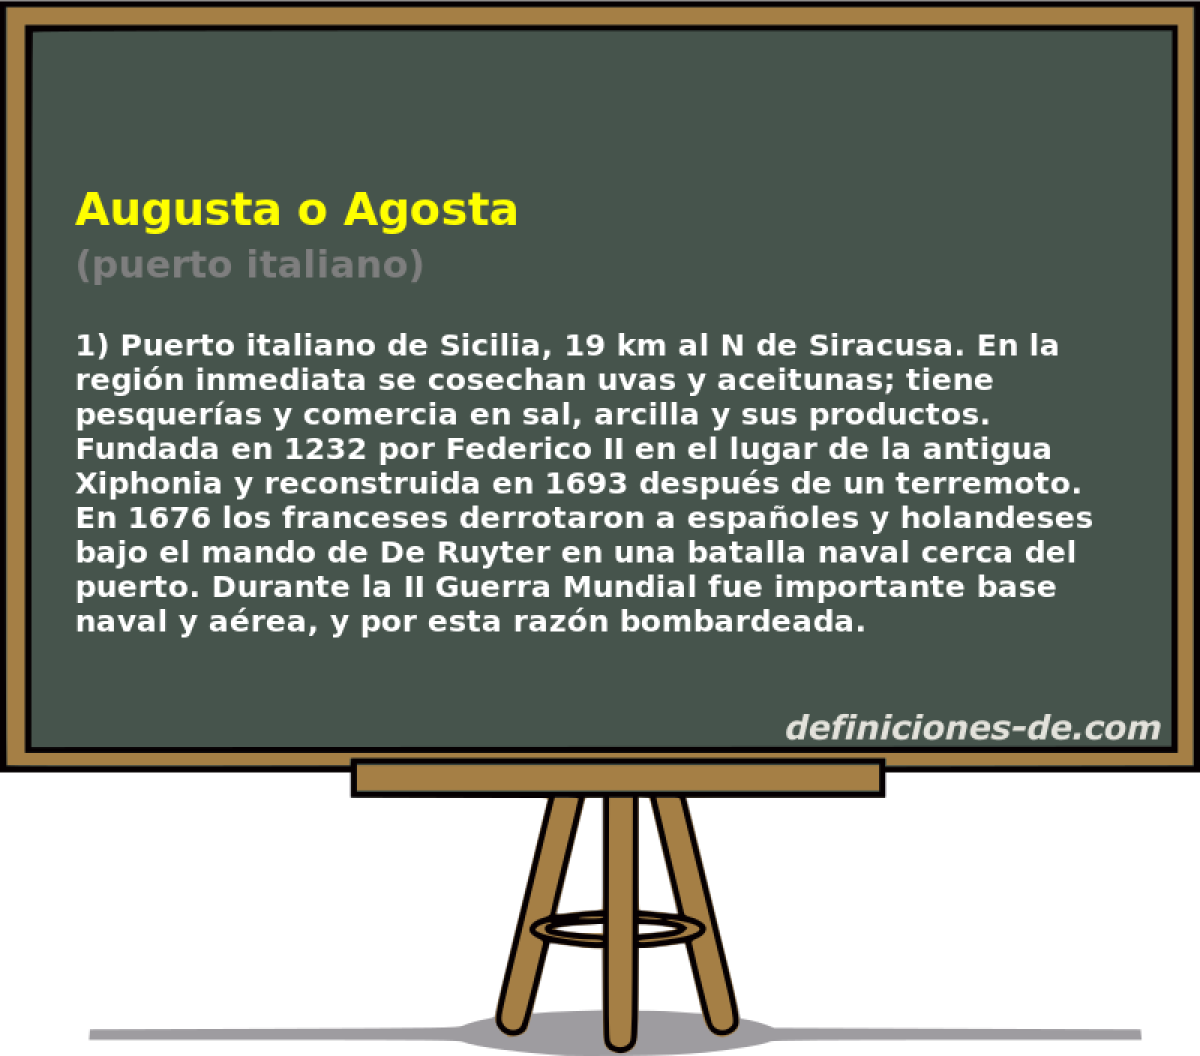 Augusta o Agosta (puerto italiano)